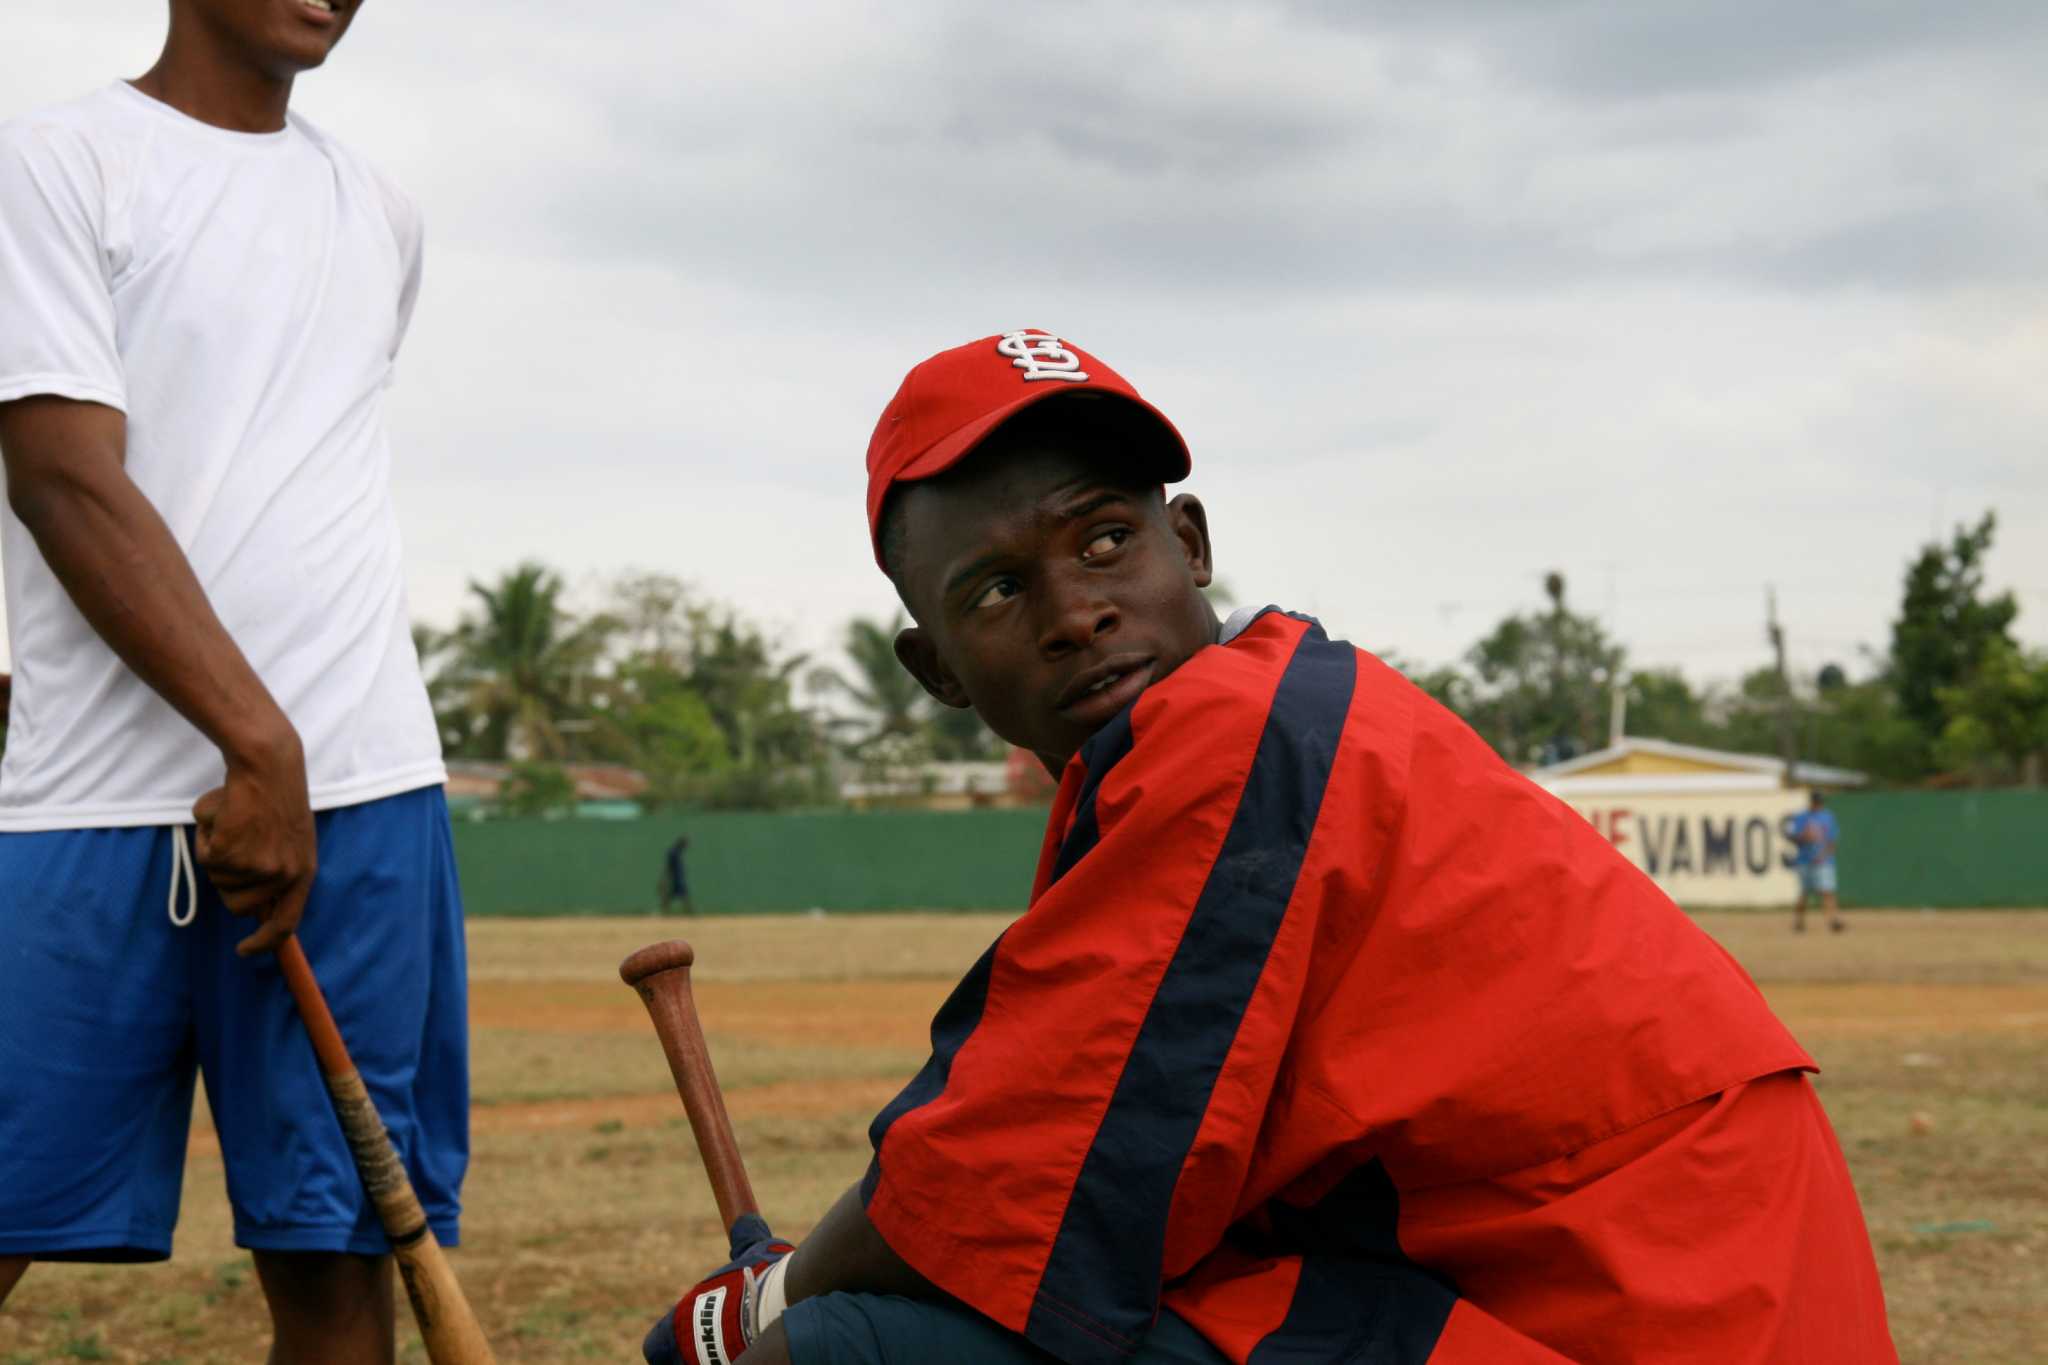 Farming new baseball talent in the Dominican Republic